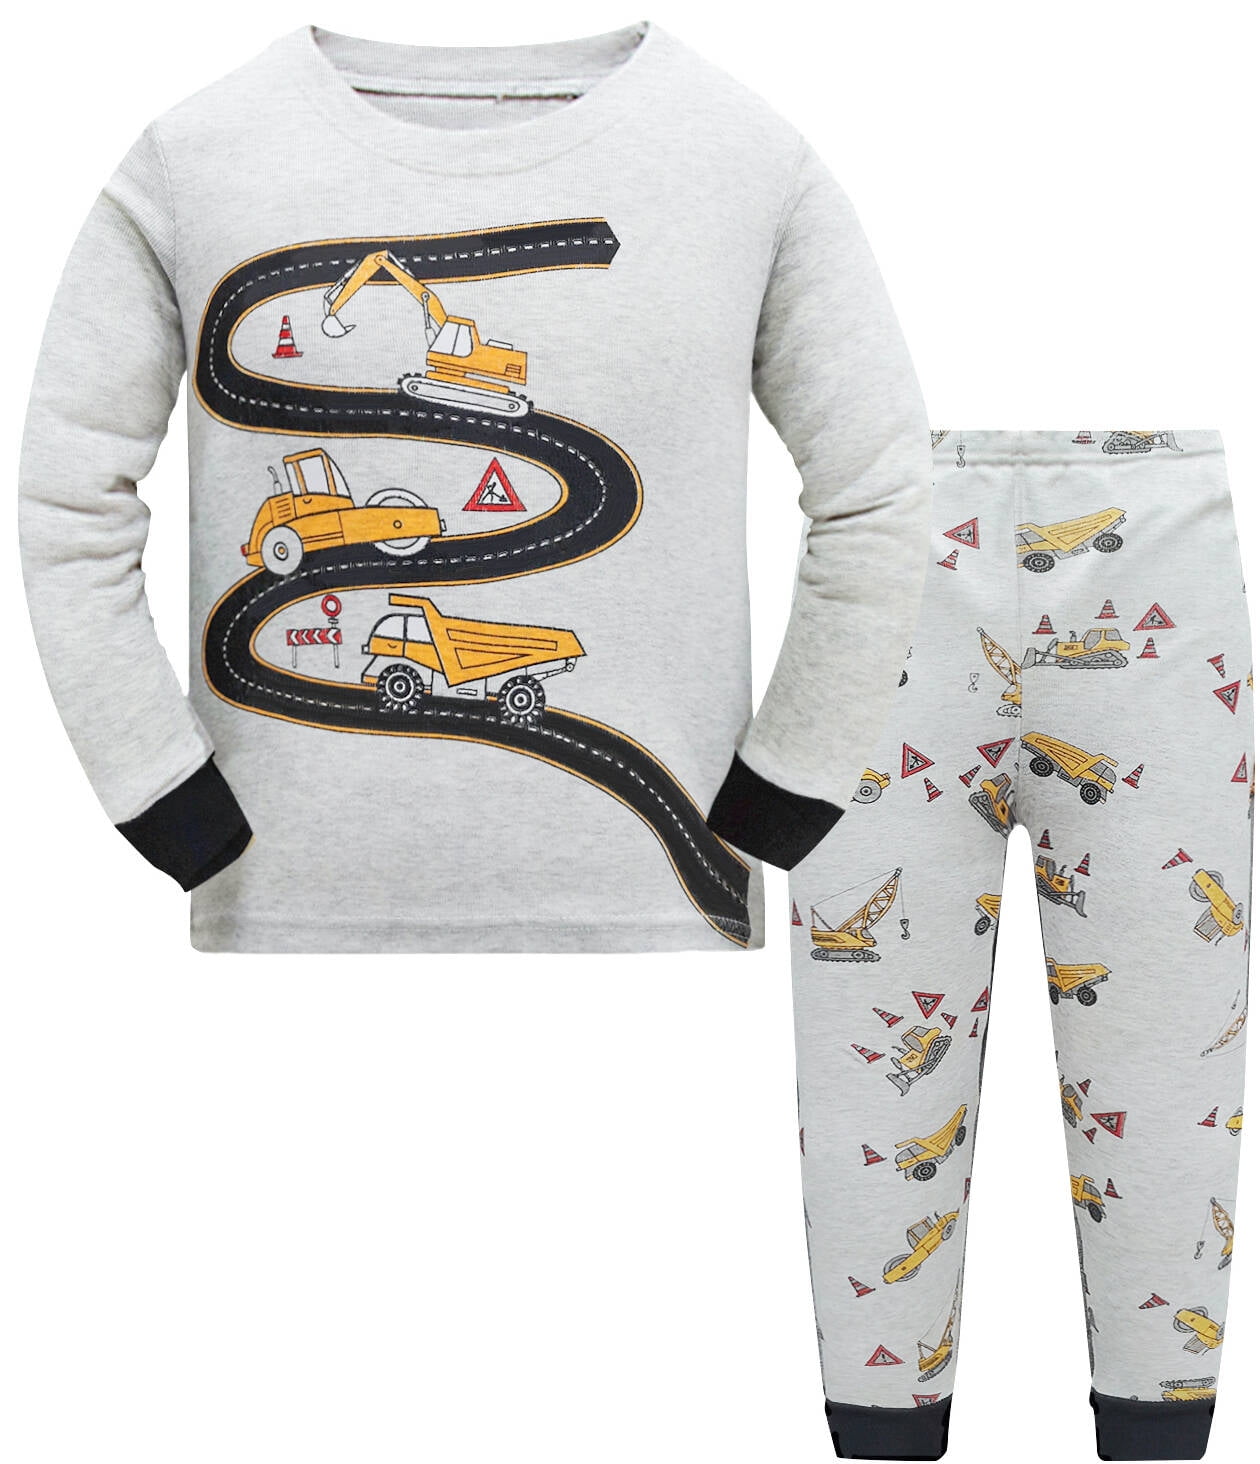 Akyzic Boys Pajamas 100% Cotton Summer Pjs for Toddler Boy Train Dinosaur 2 Piece Sleepwear Short Set Clothes Size 2-10T 